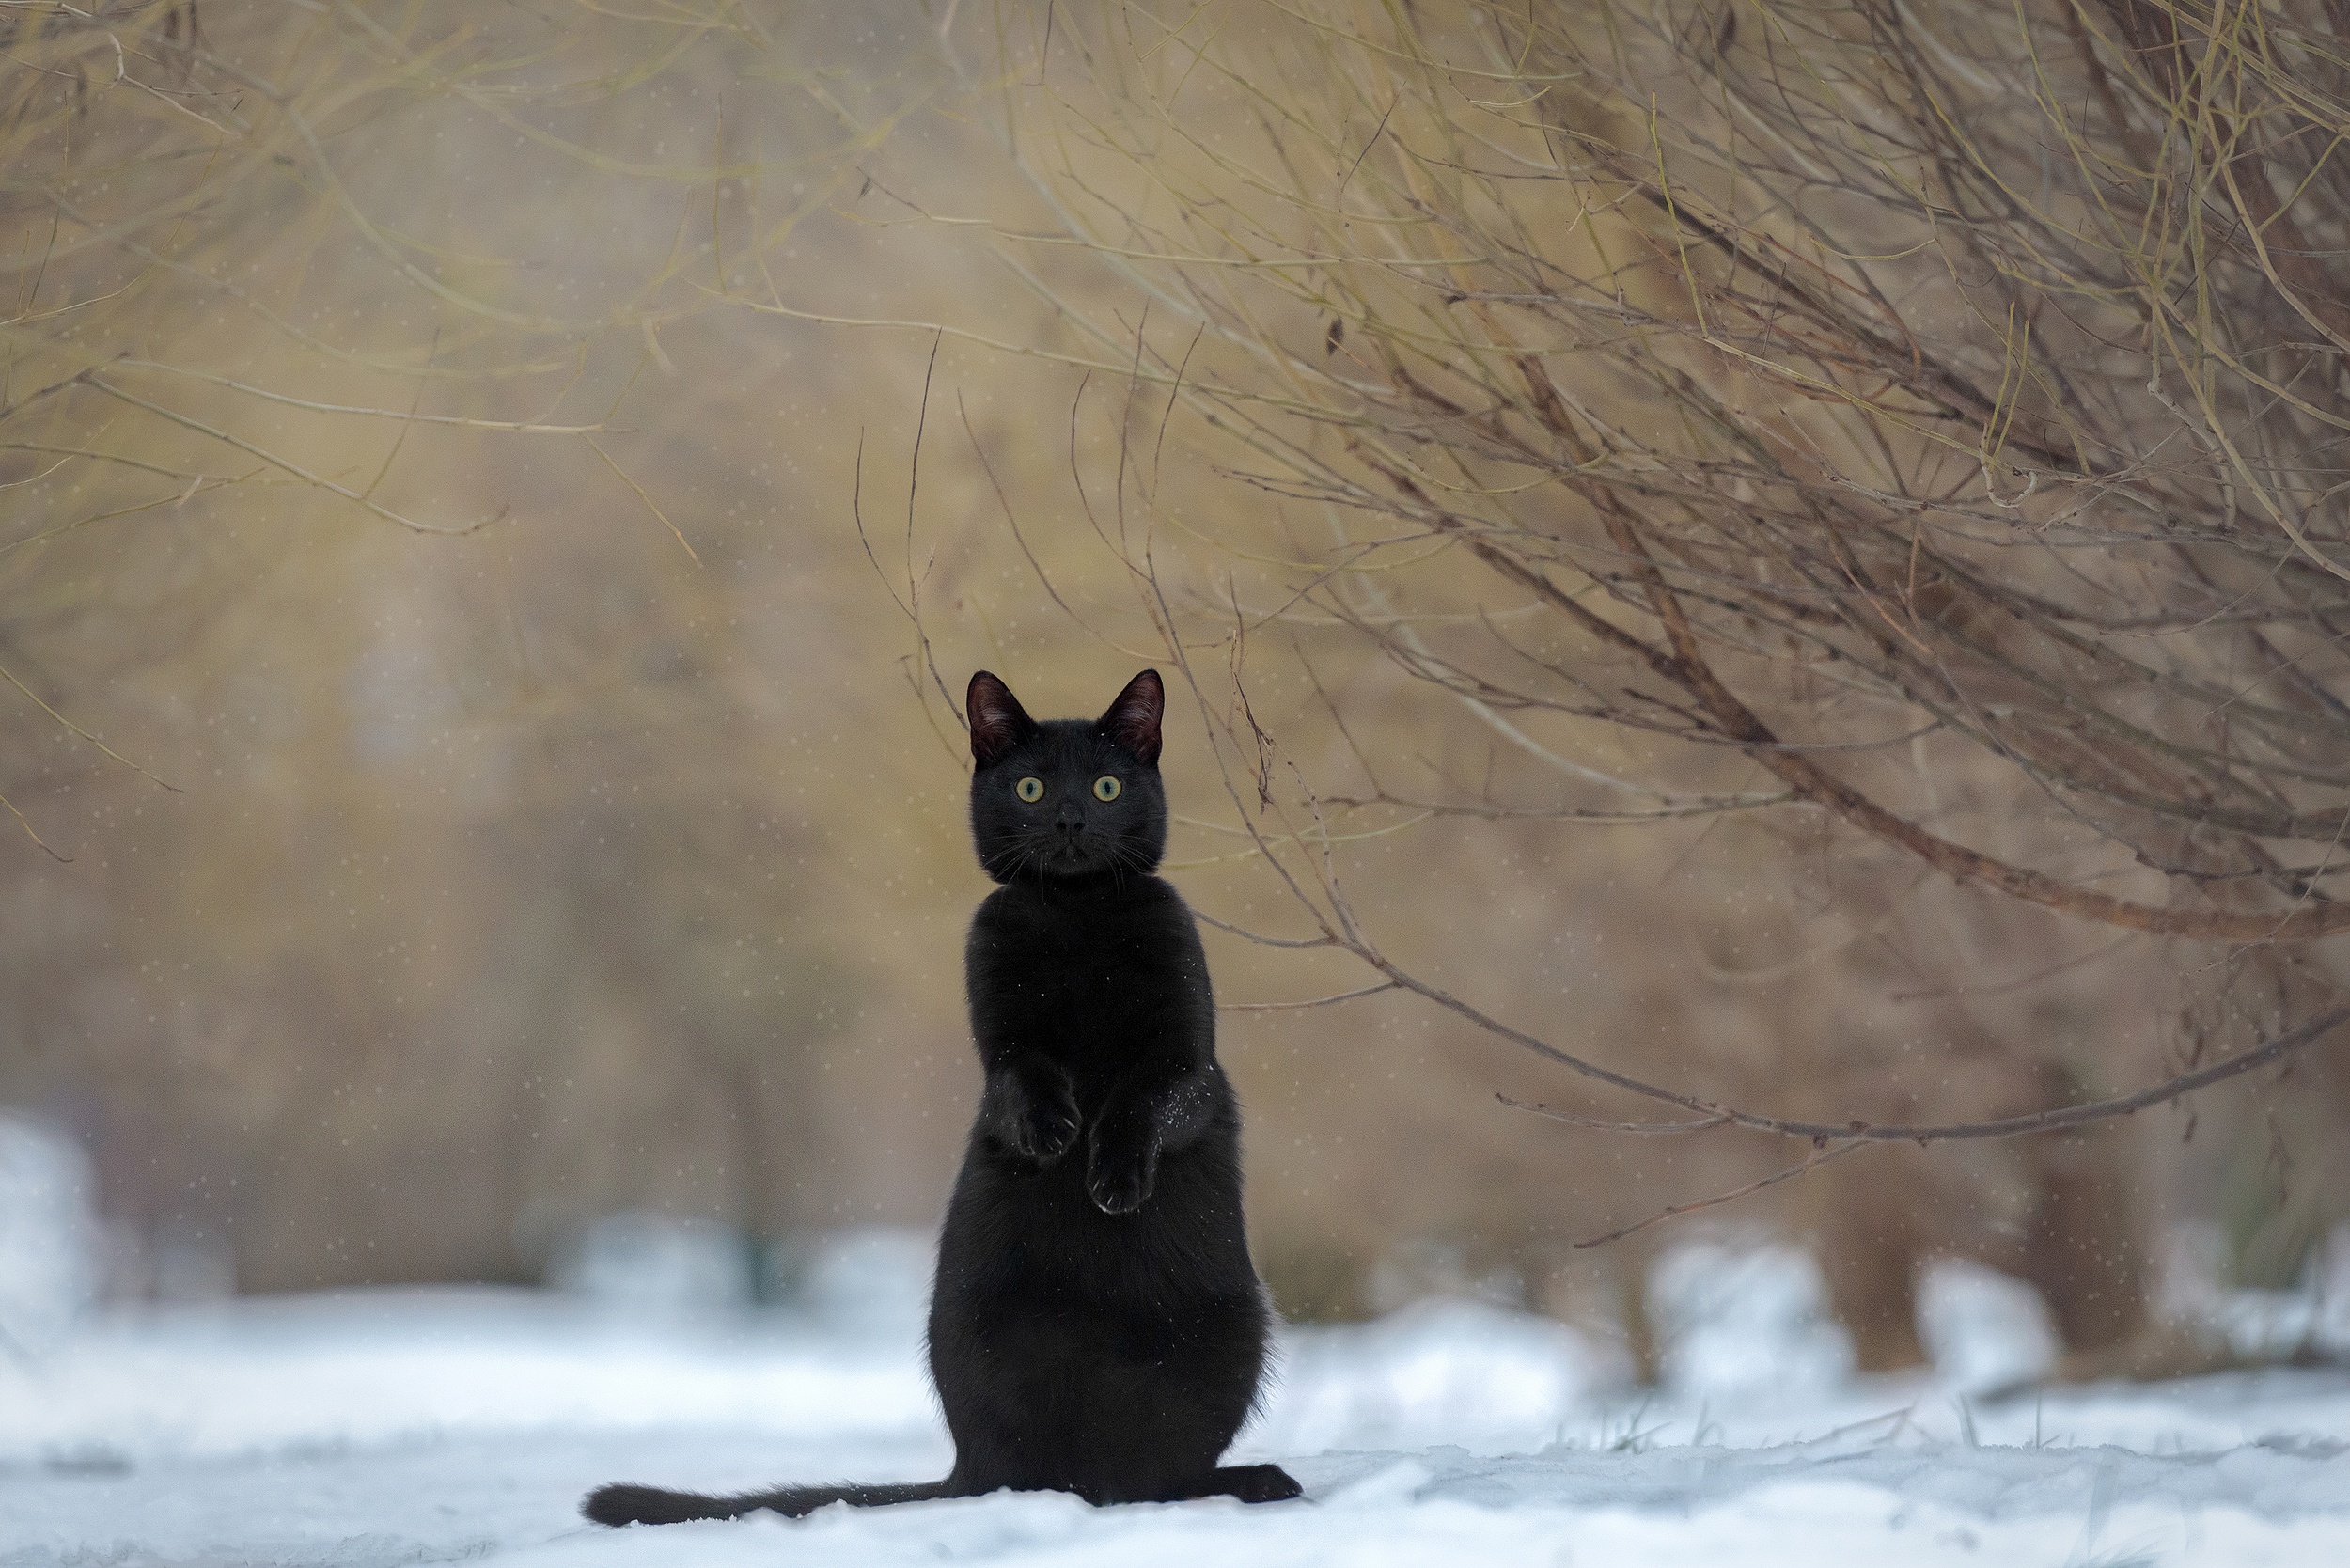 General 2500x1668 animals cats mammals outdoors black cats snow winter nature feline